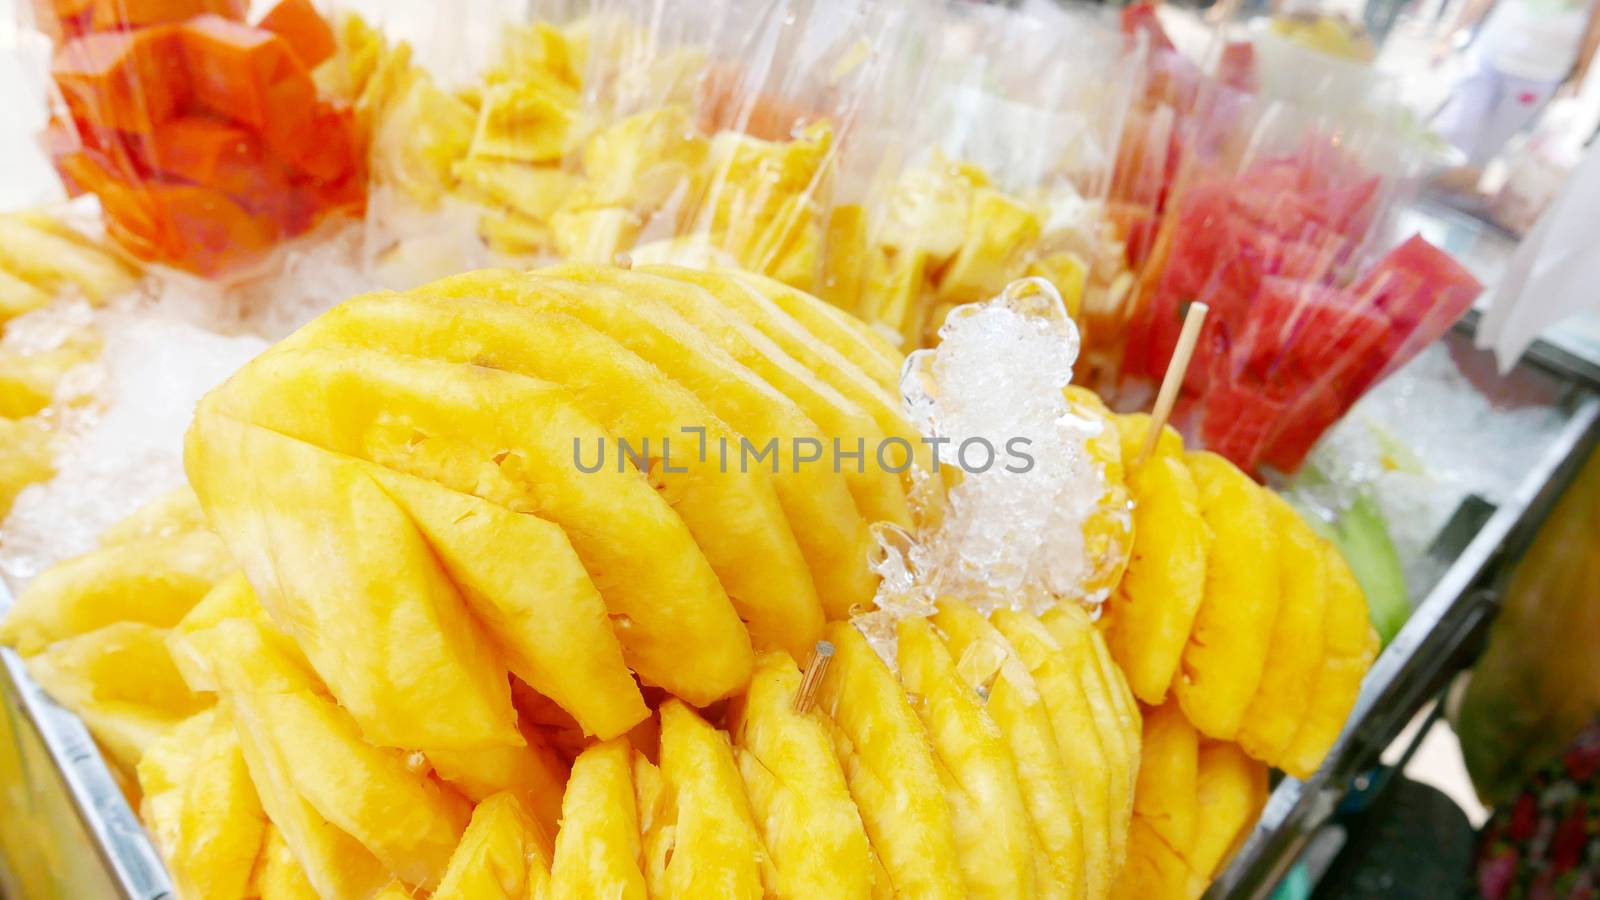 Thailand fruit market closeup